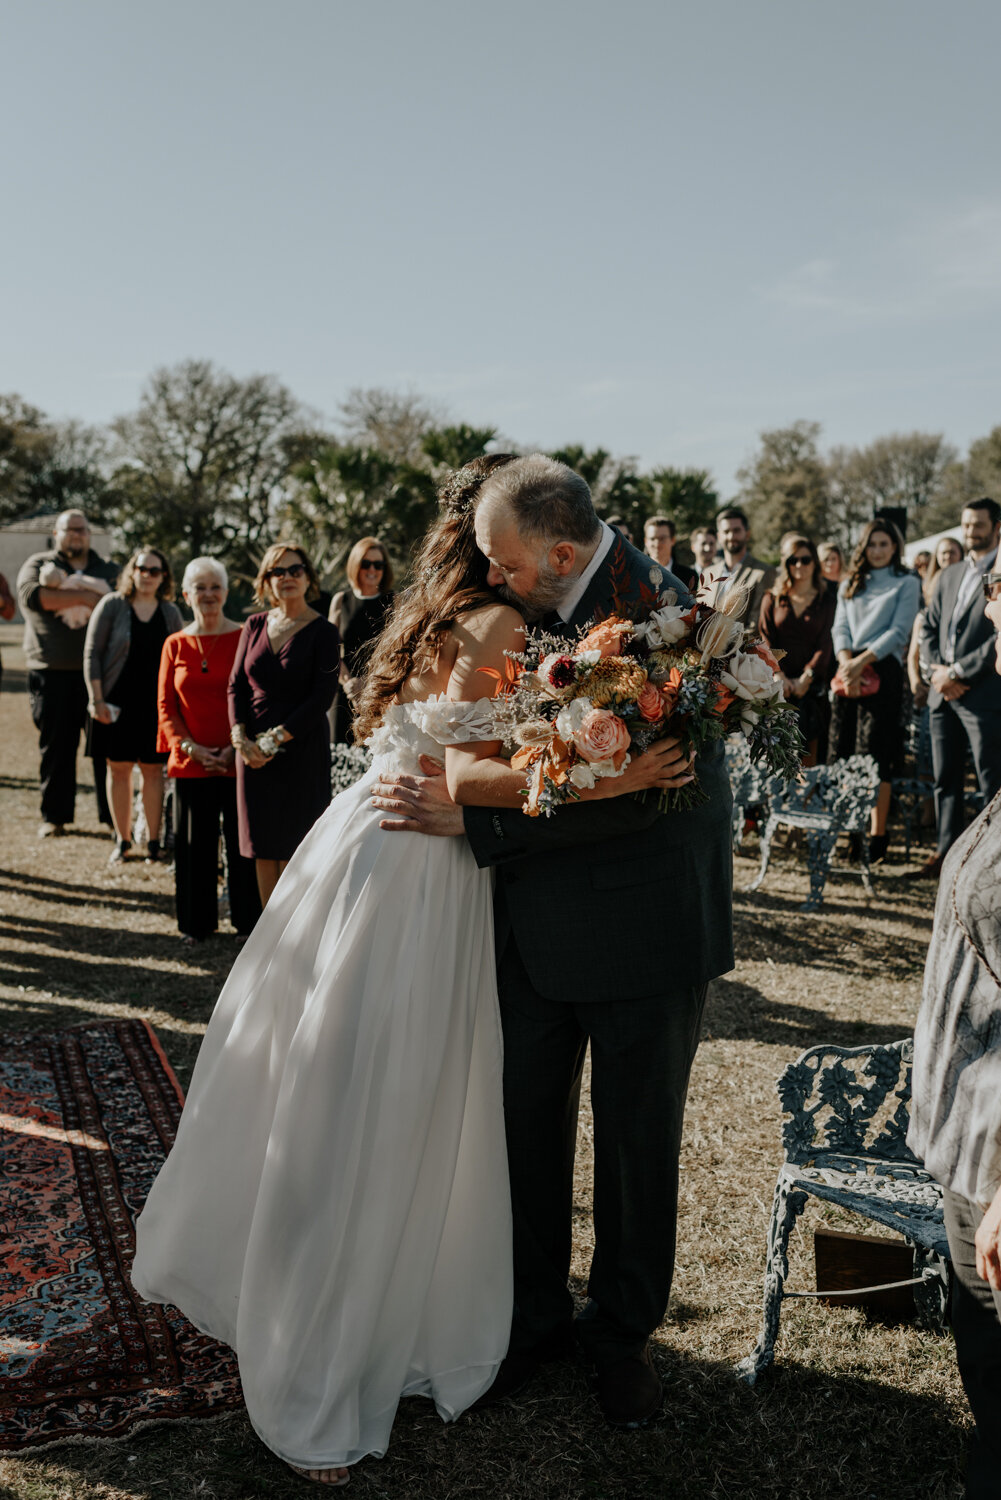 Austin, Texas Intimate Wedding Ceremony Ideas